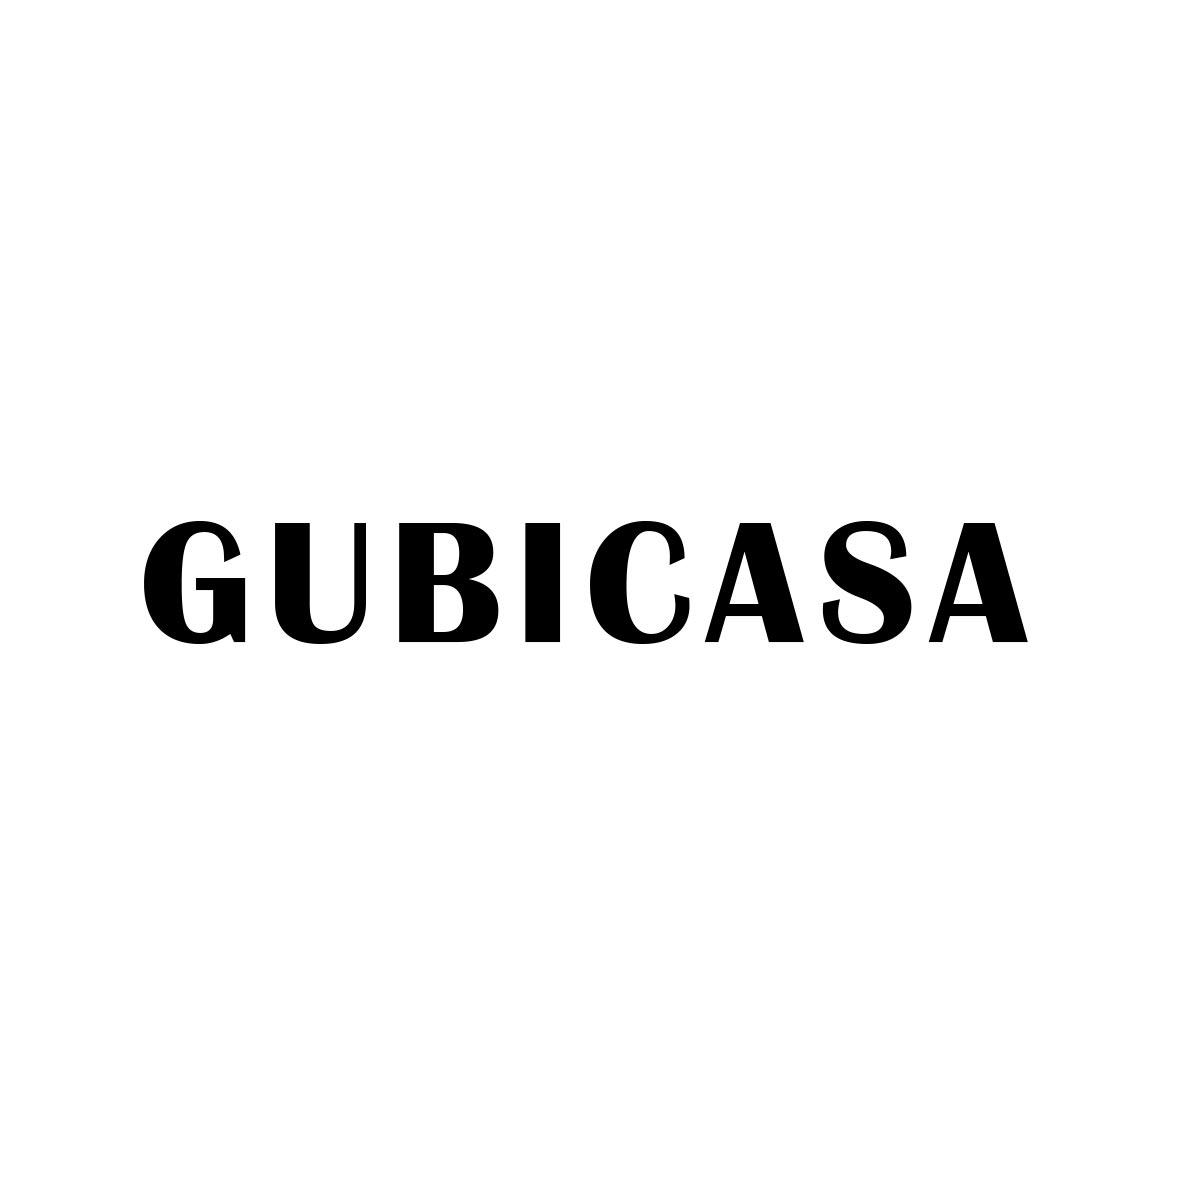 GUBICASA